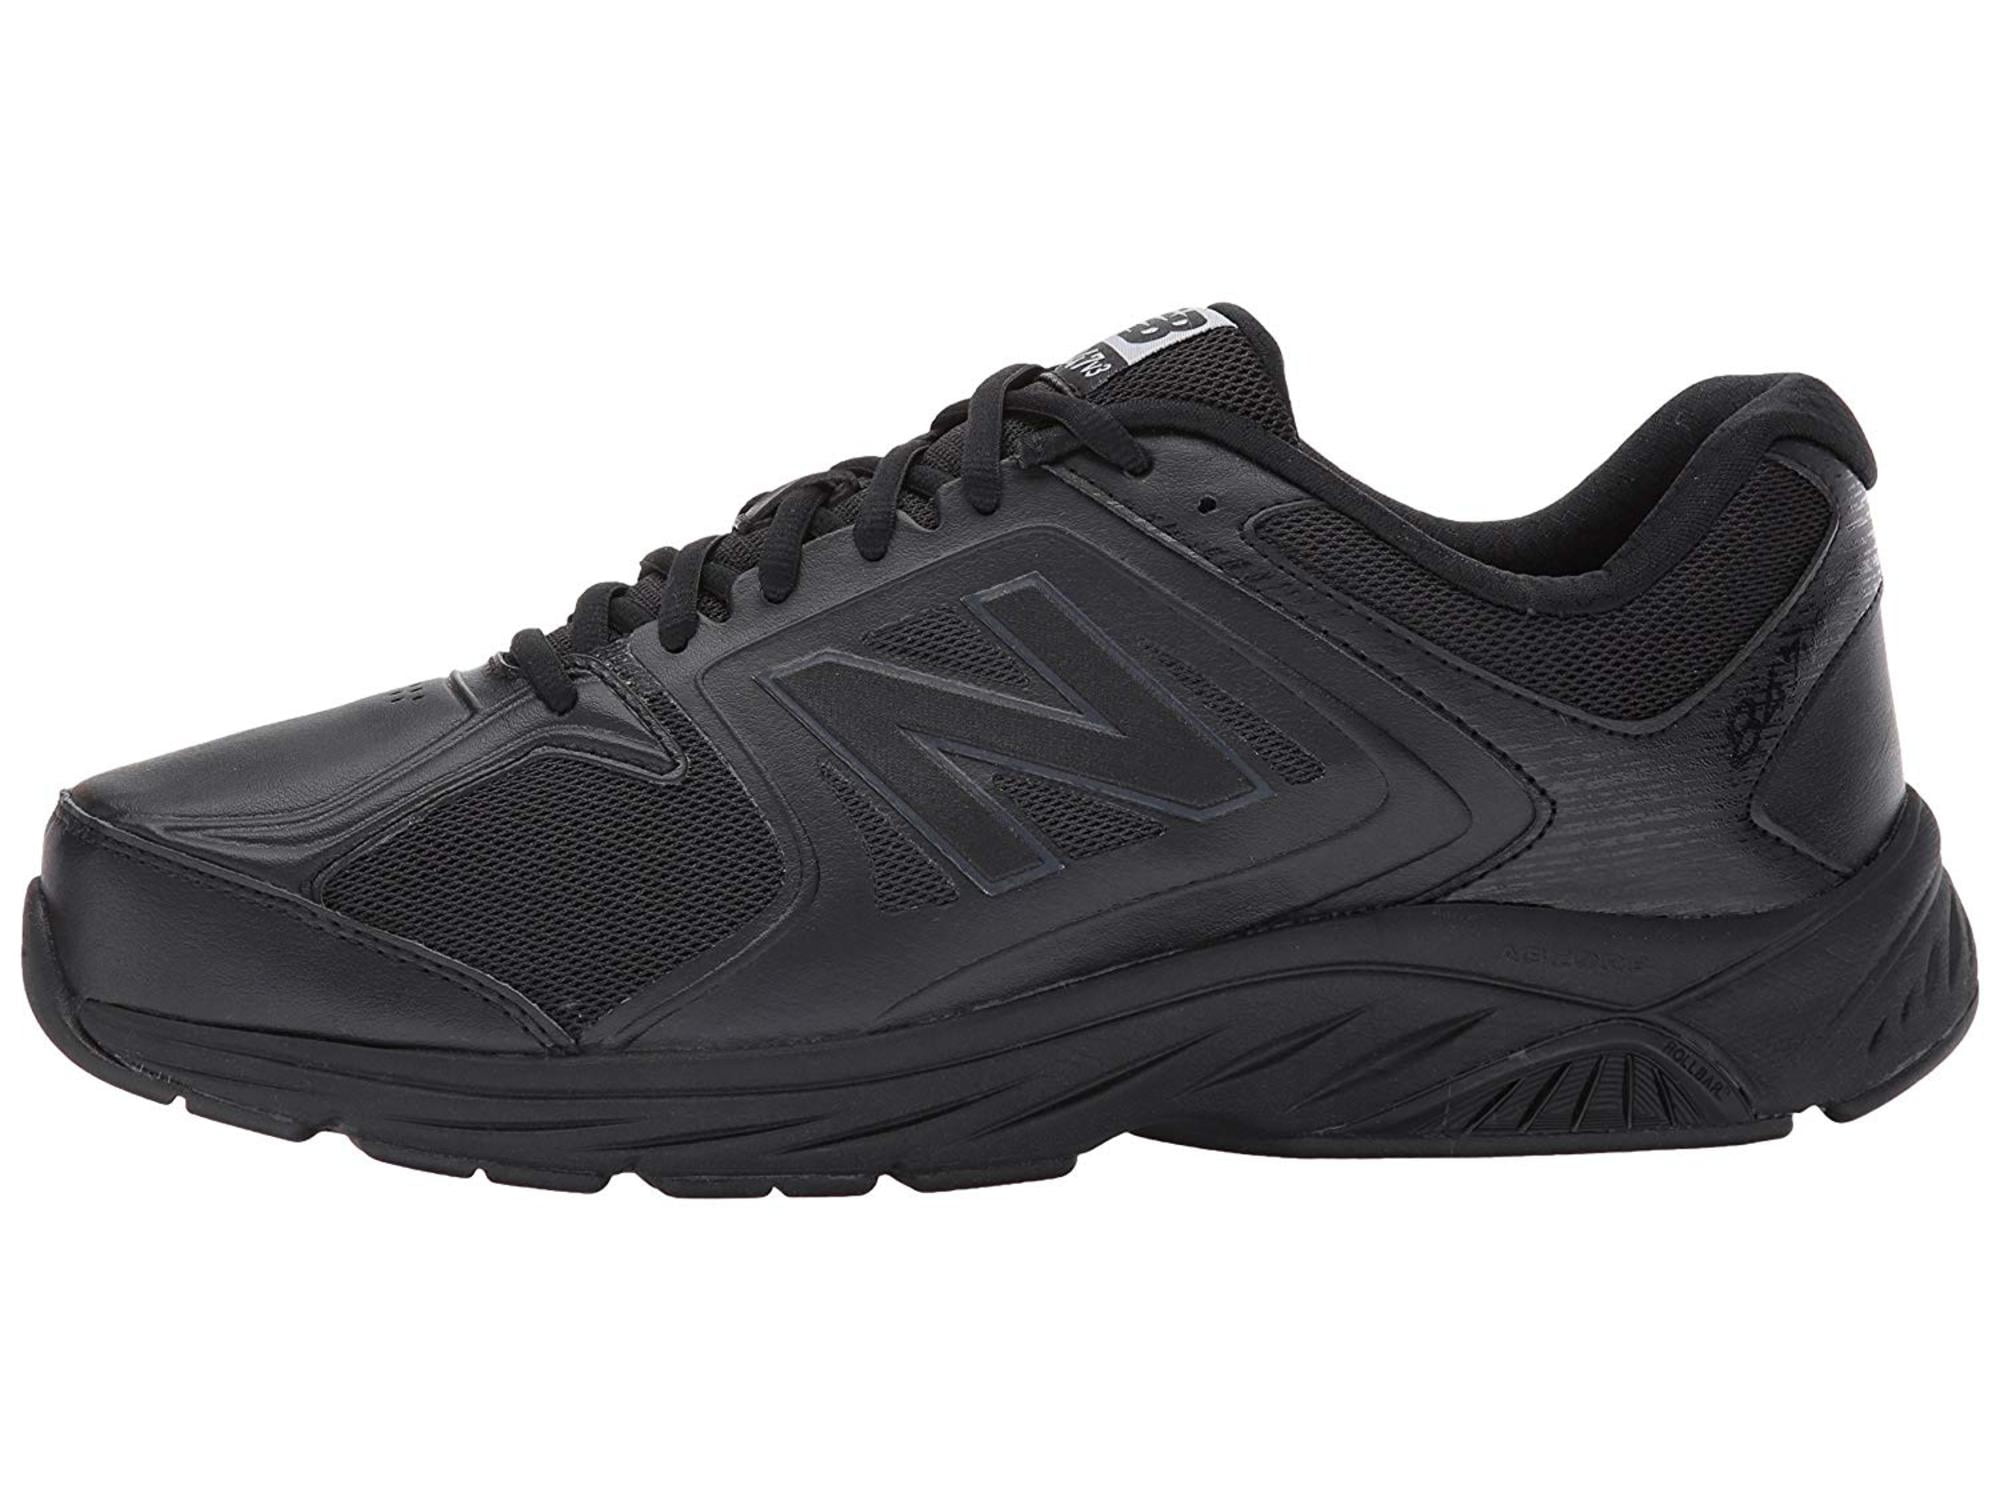 new balance men's mw577 black walking shoe - 11 4e us